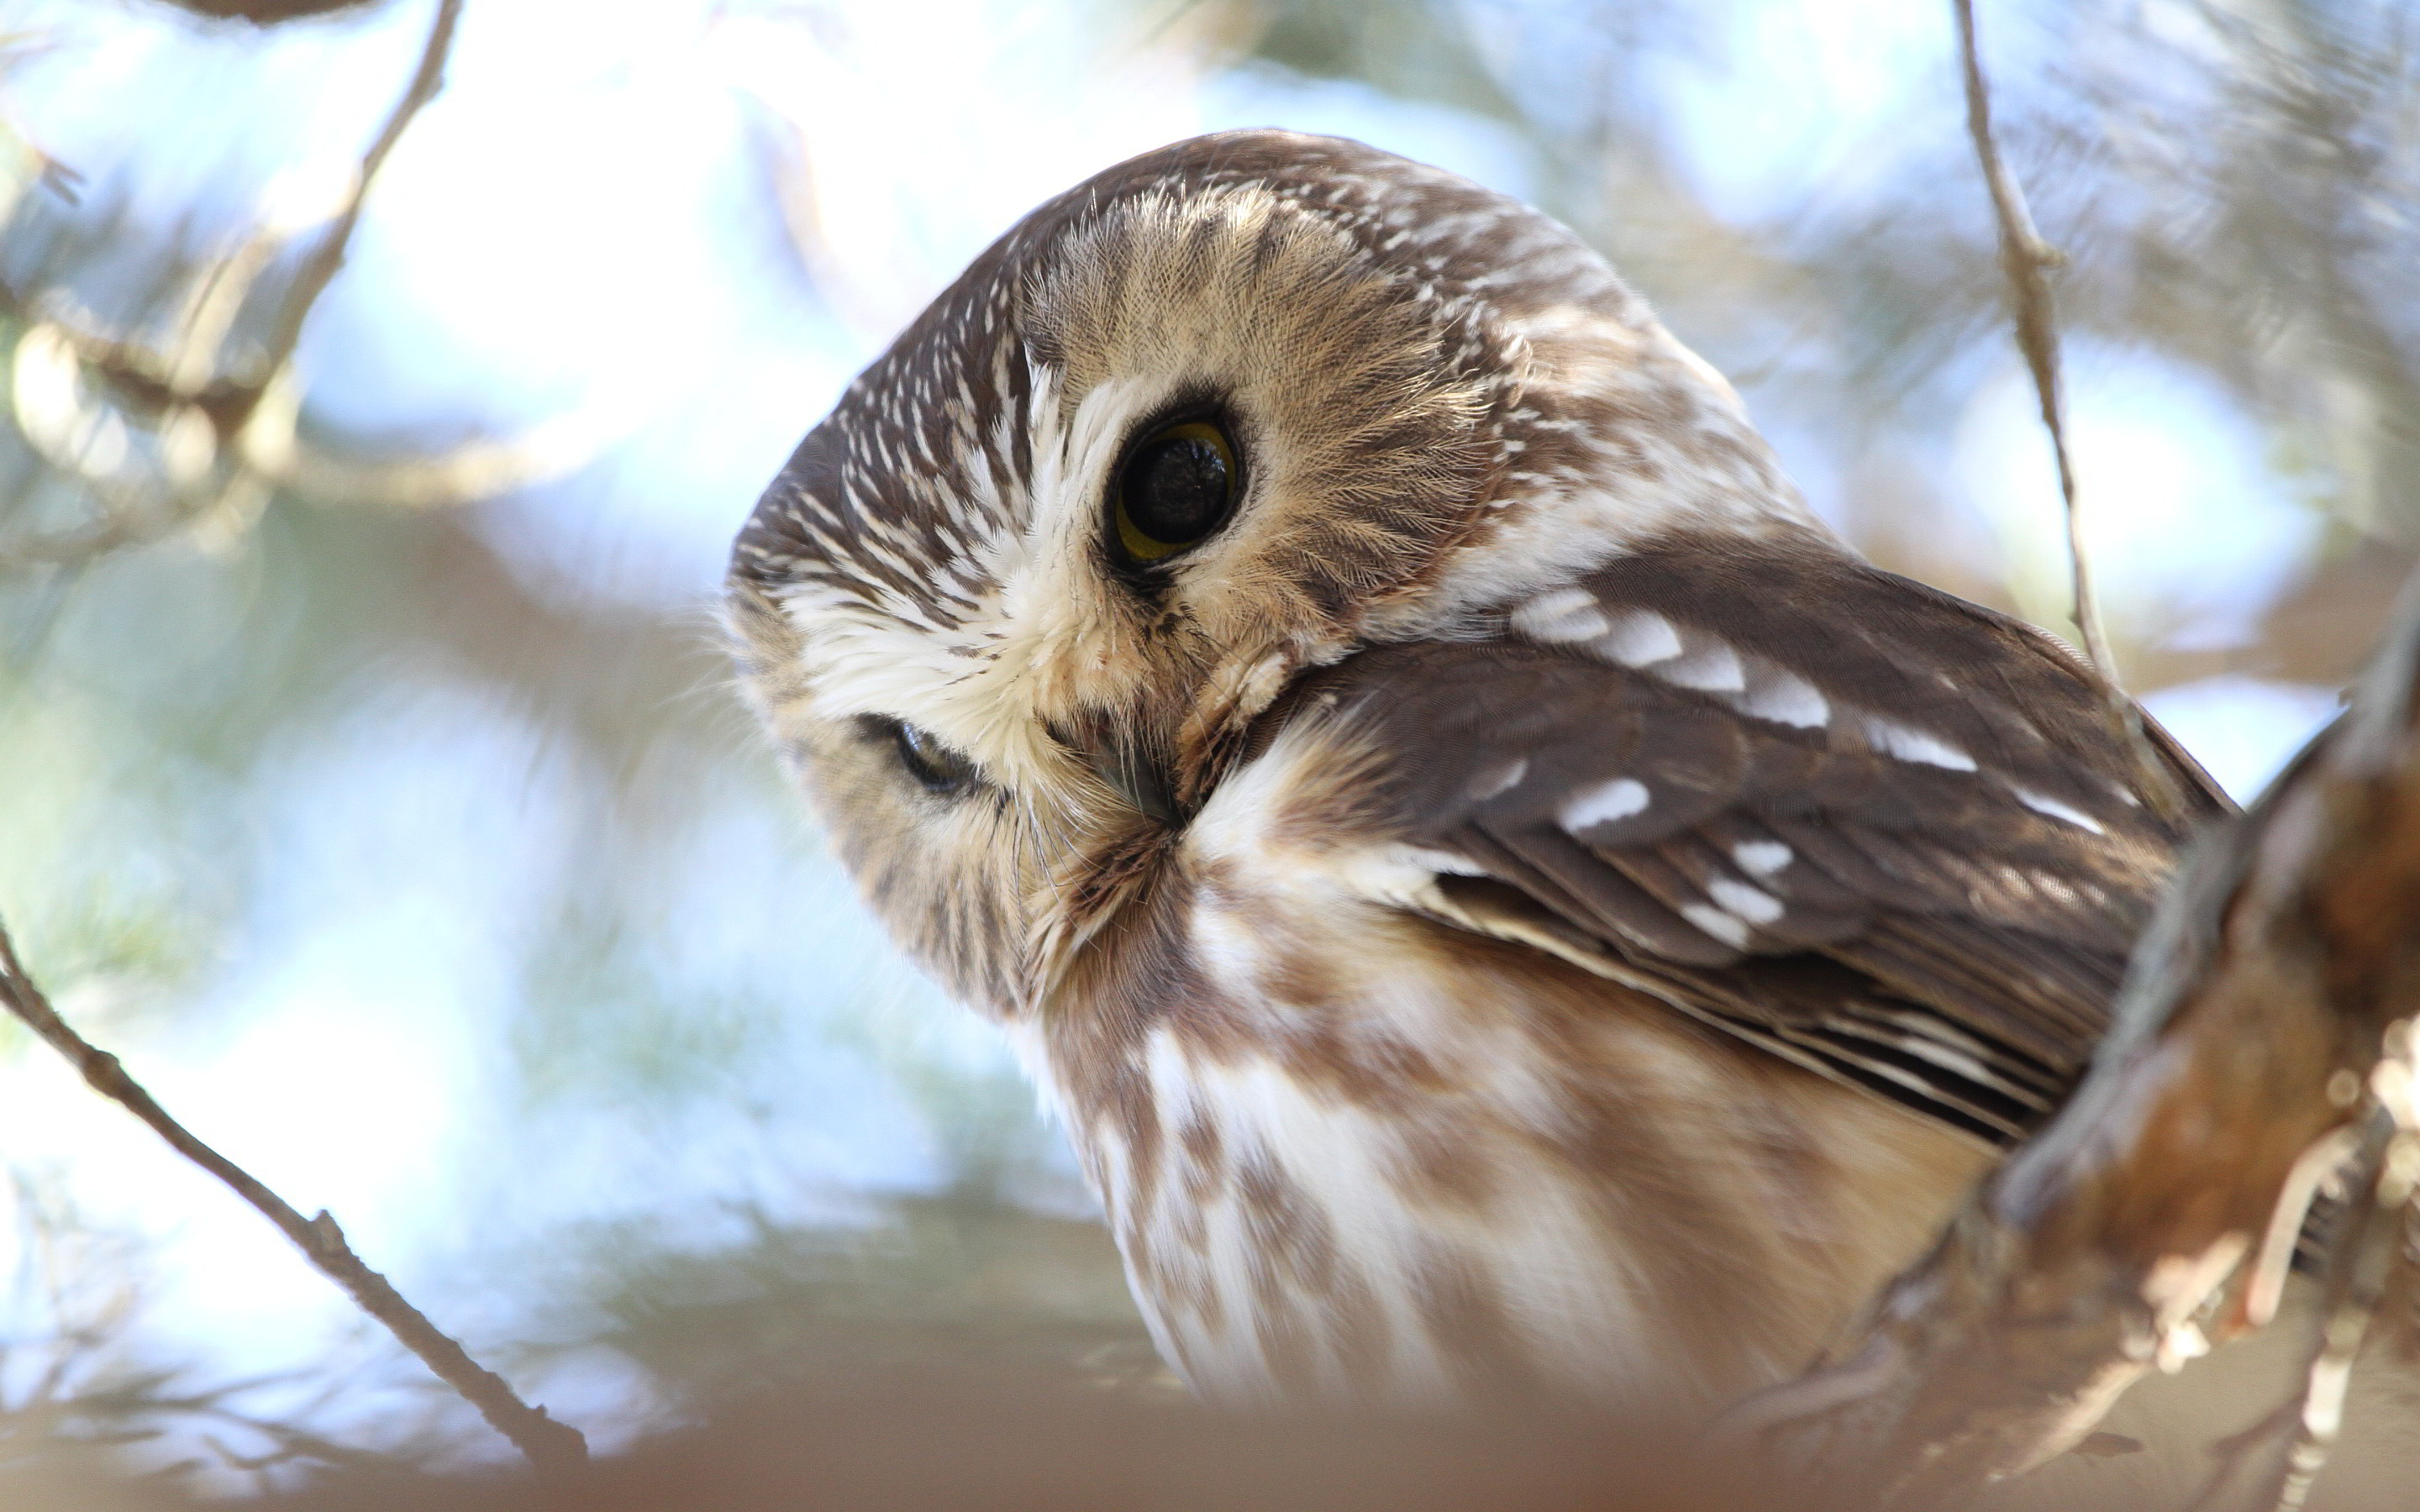 Tags: Owl